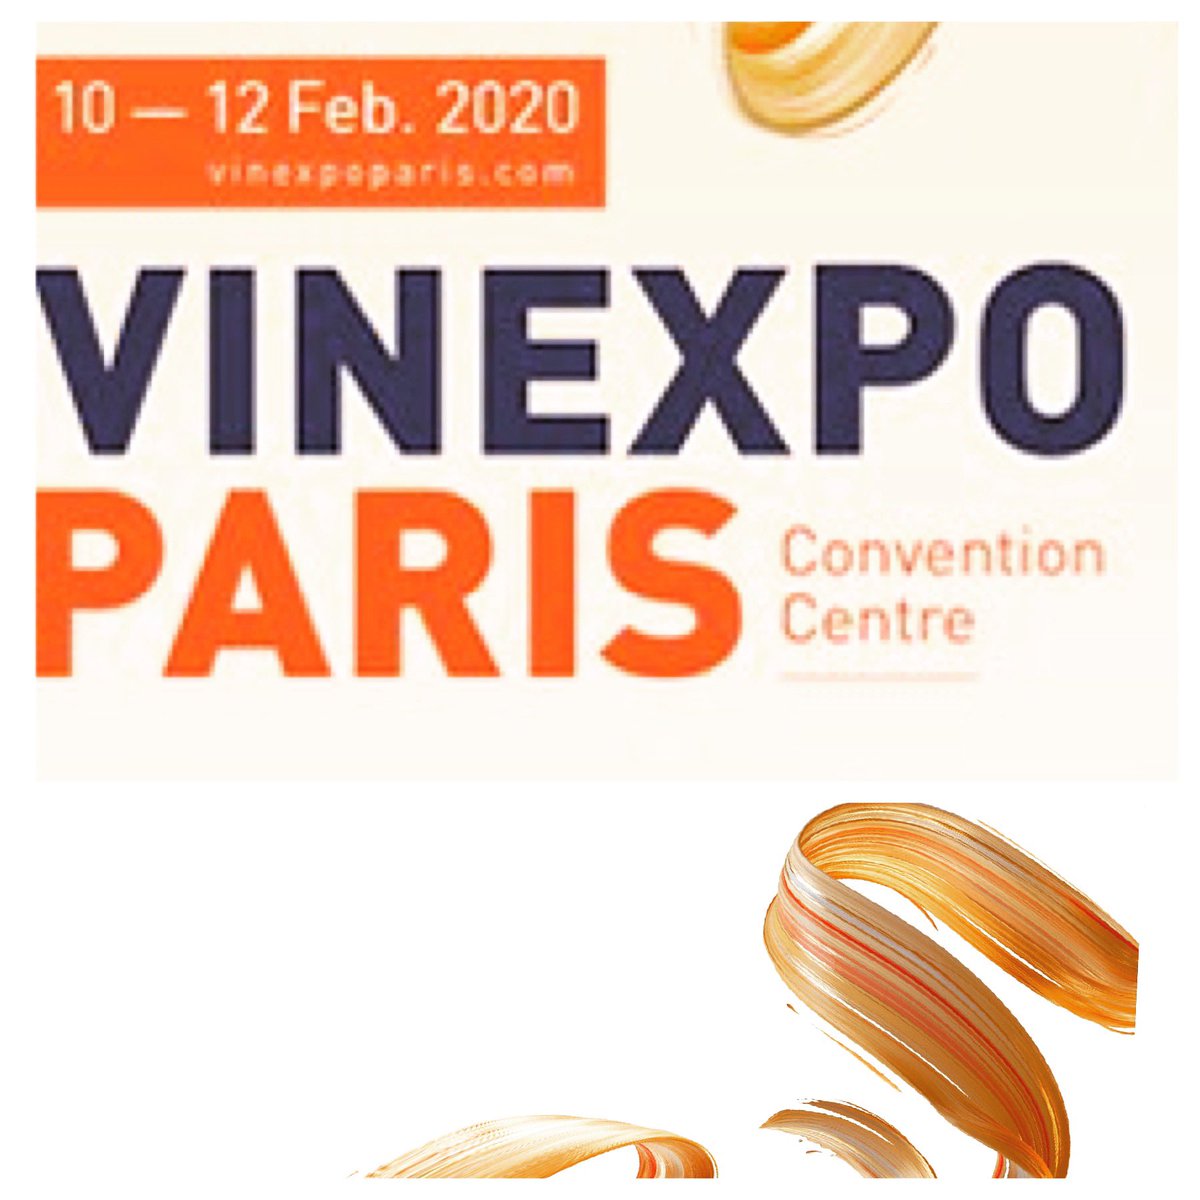 Vinexpo Paris 2020 is under the patronage of Emmanuel Macron
liz-palmer.com/vinexpo-paris-….
@vinexpo #vinexpo #vinexpoparis #vinexpoparis2020 #walkinthewineside #wine #spirits #tradeshow #winetasting #winelover #winery #winetasting #wineeducation #simplewinenews #winebuyer